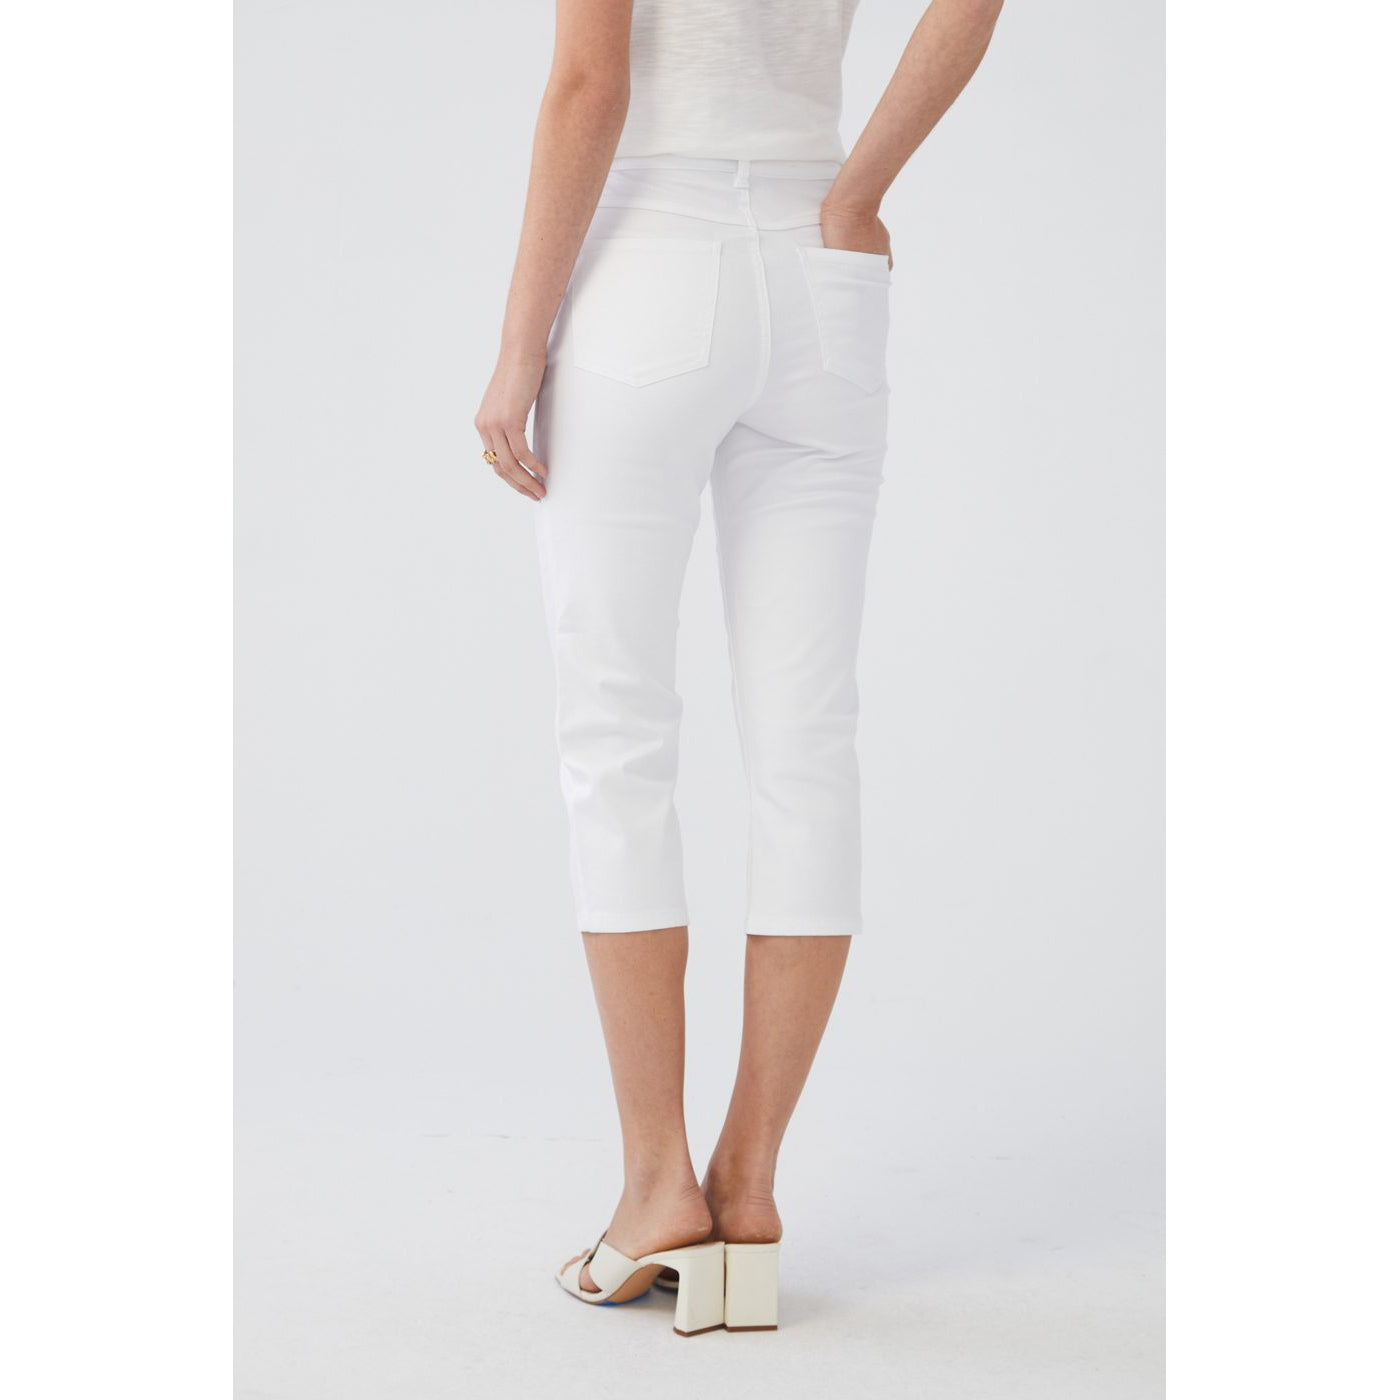 SUZANNE STRAIGHT CAPRI-Denim-FRENCH DRESSING JEANS-4-WHITE-Coriander